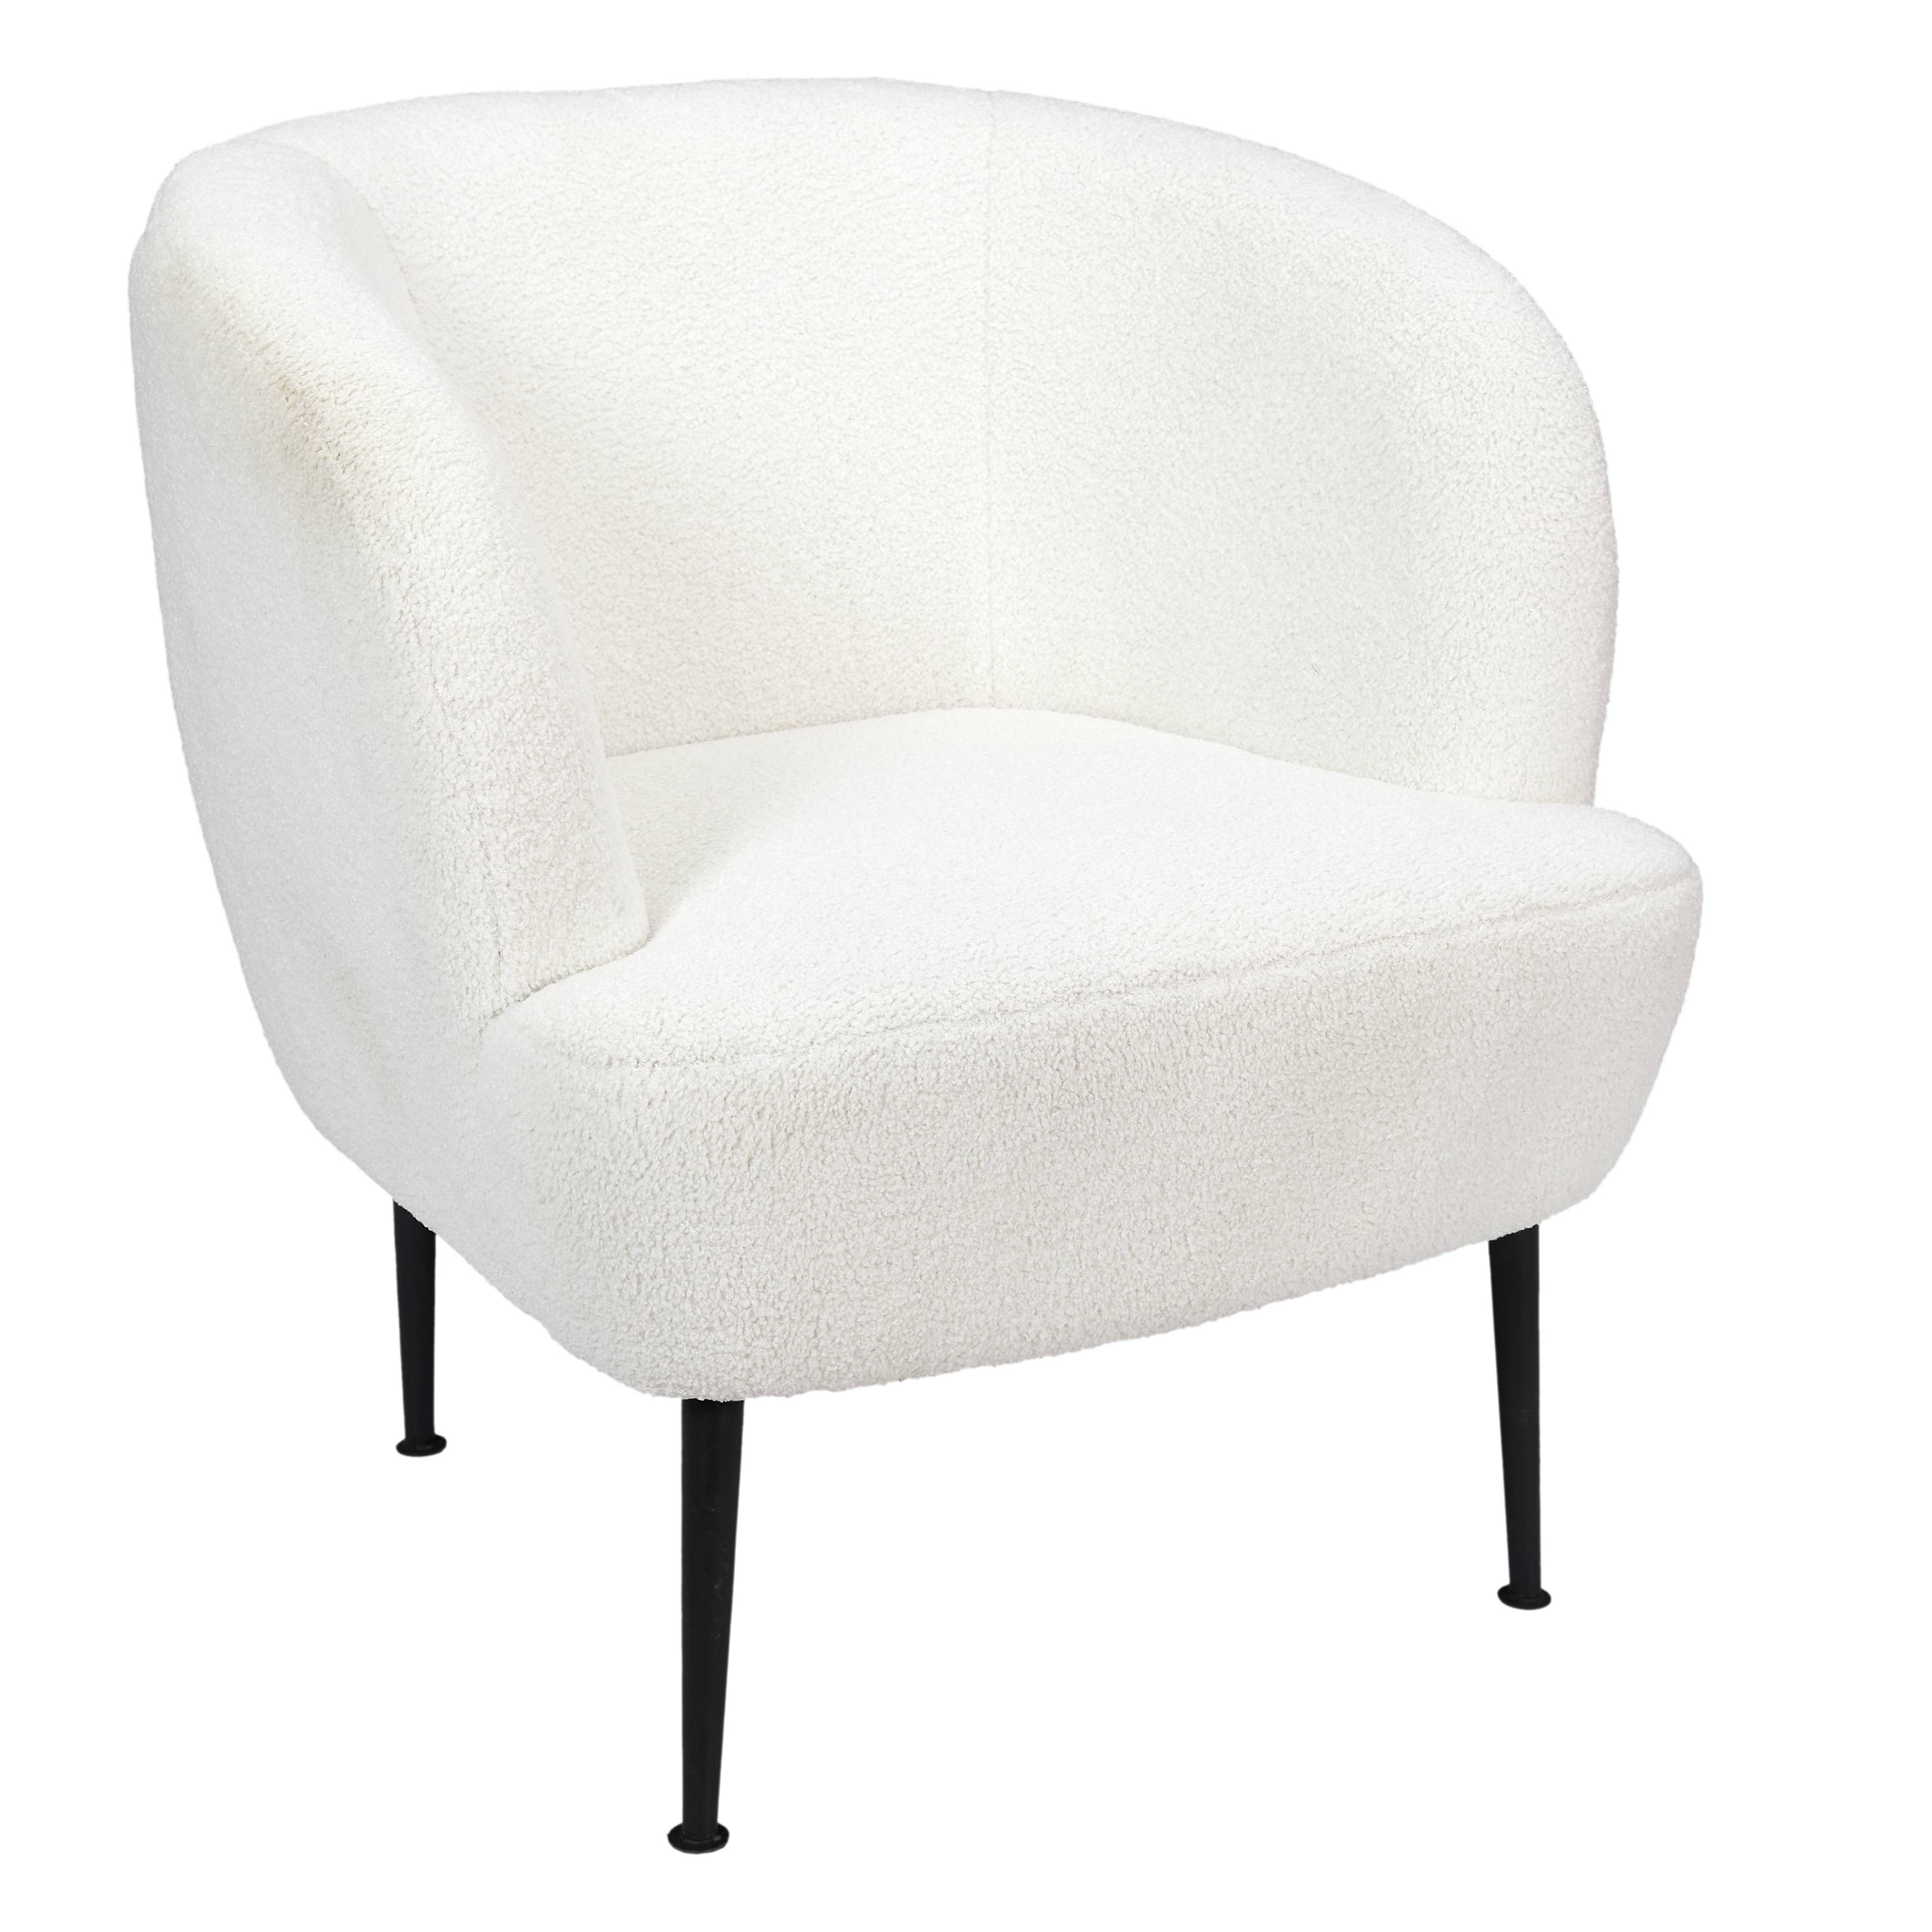 https://cdn.menzzo.com/media/catalog/product/f/a/u/fauteuil-bohdan-fourrure-blanc_0-63482a60e3d78.jpg?twic=v1/resize=700